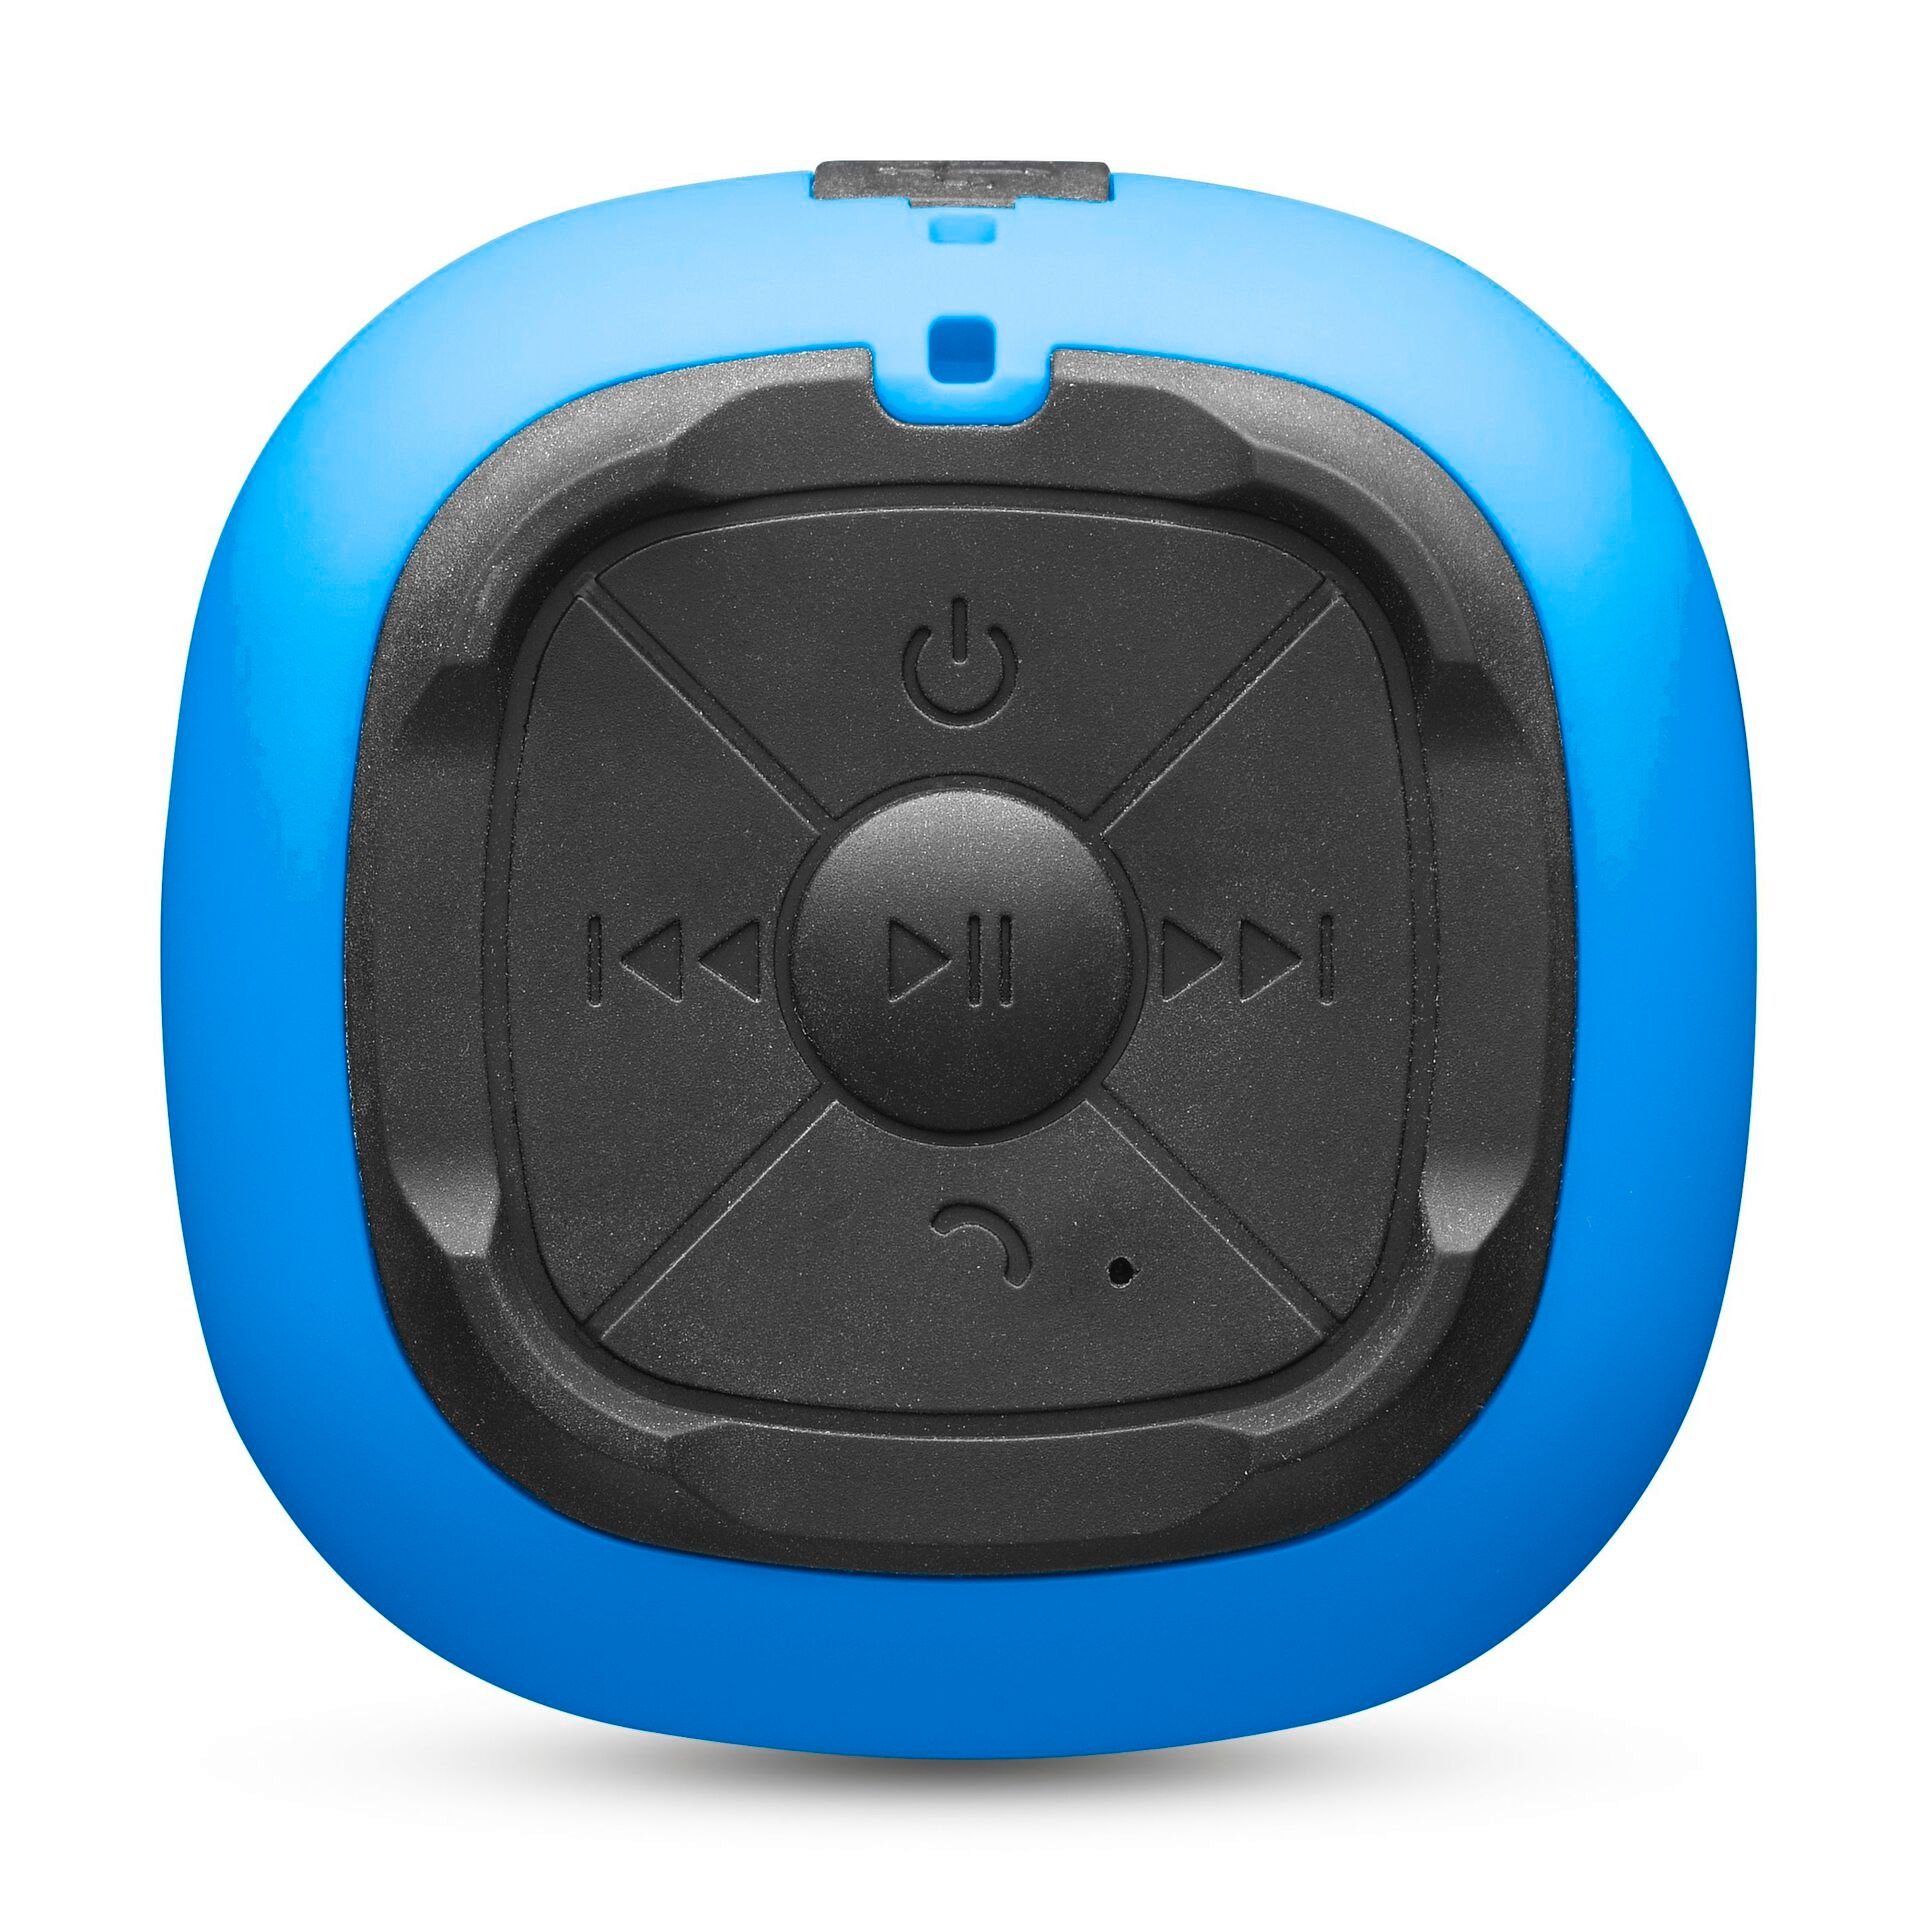 Cellularline (Bluetooth) Blau Wireless Mini Bluetooth-Lautsprecher Speaker